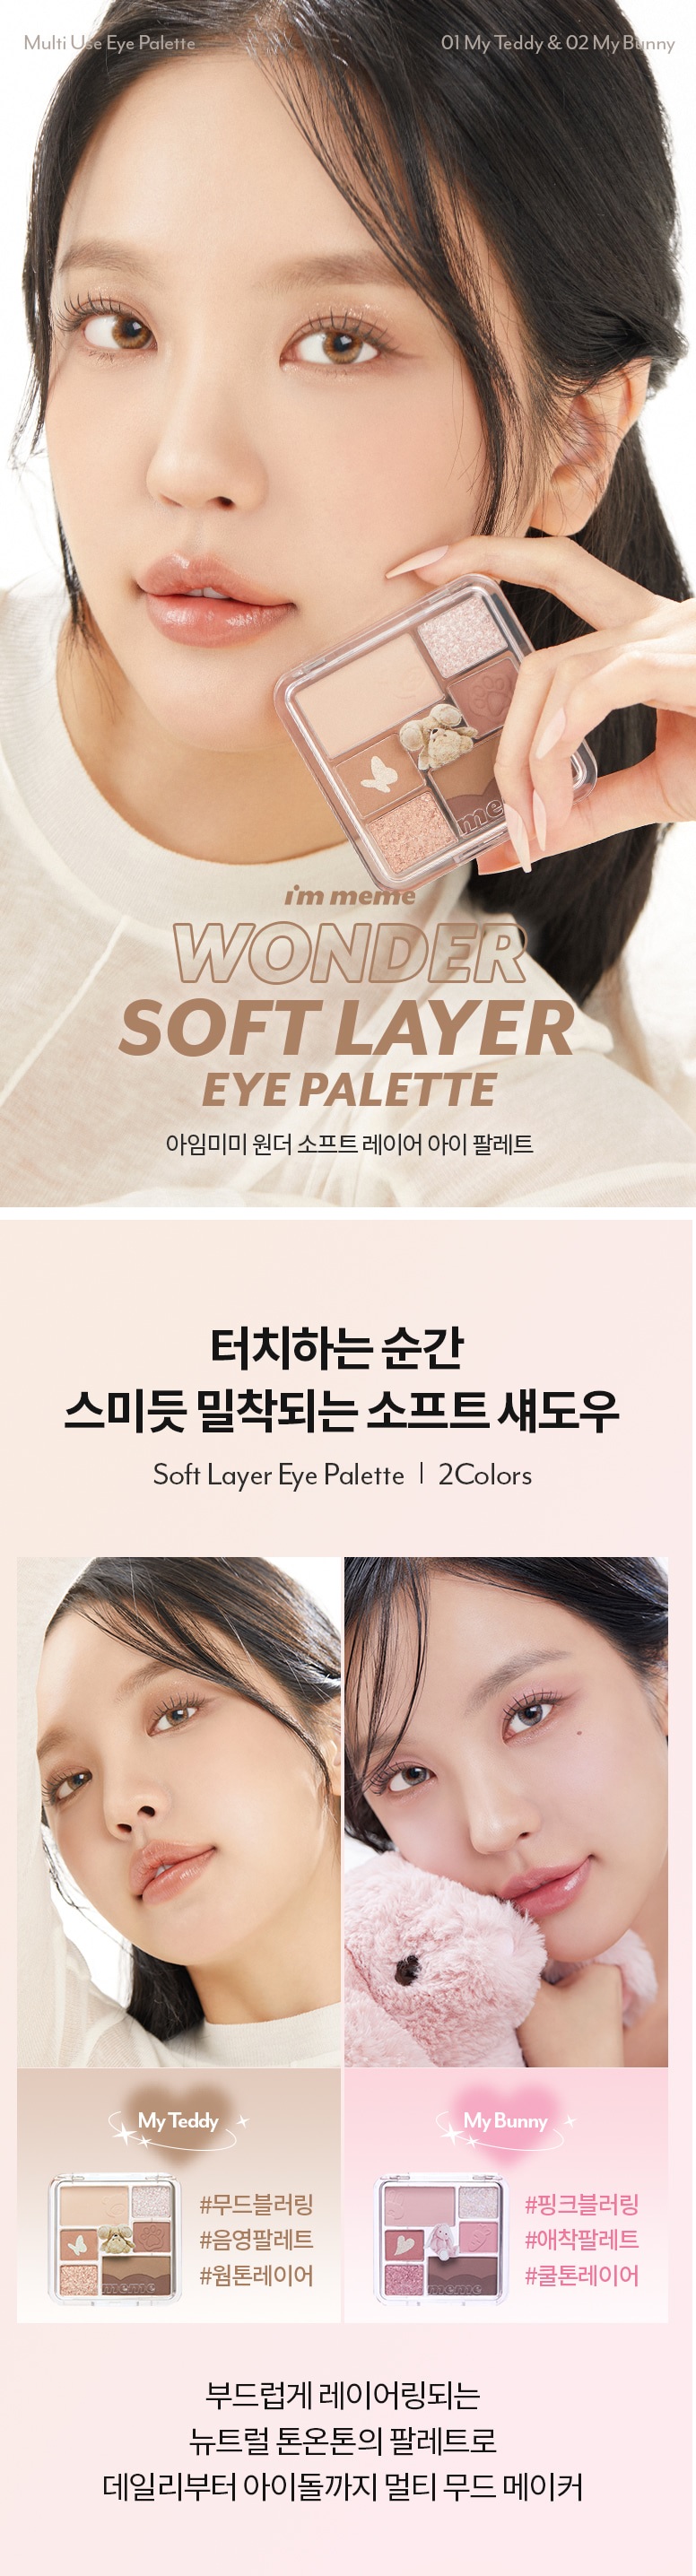 MEMEBOX Wonder Soft Layer Eye Palette korean skincare product online shop malaysia china macau1